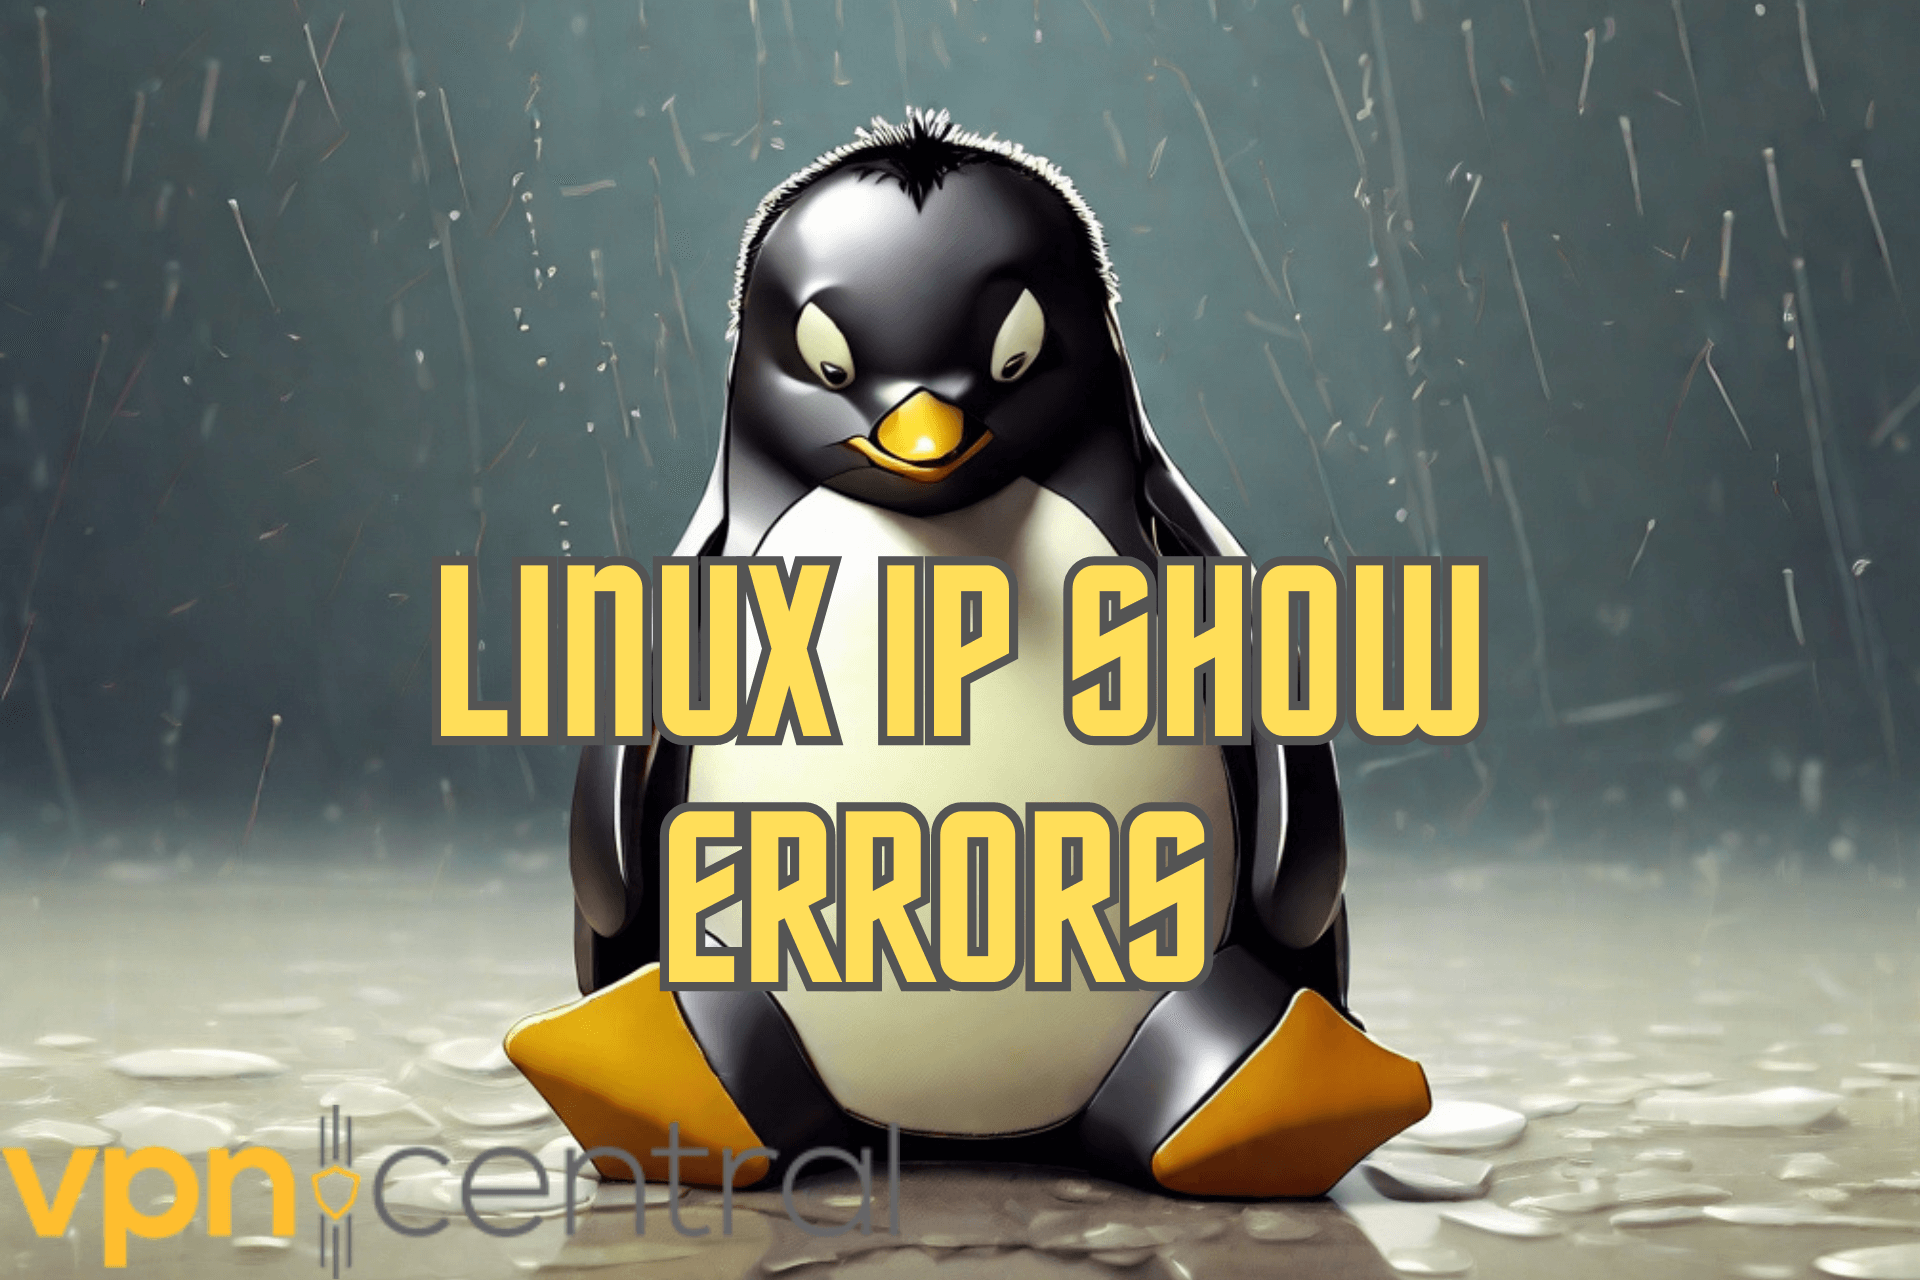 Linux IP show errors